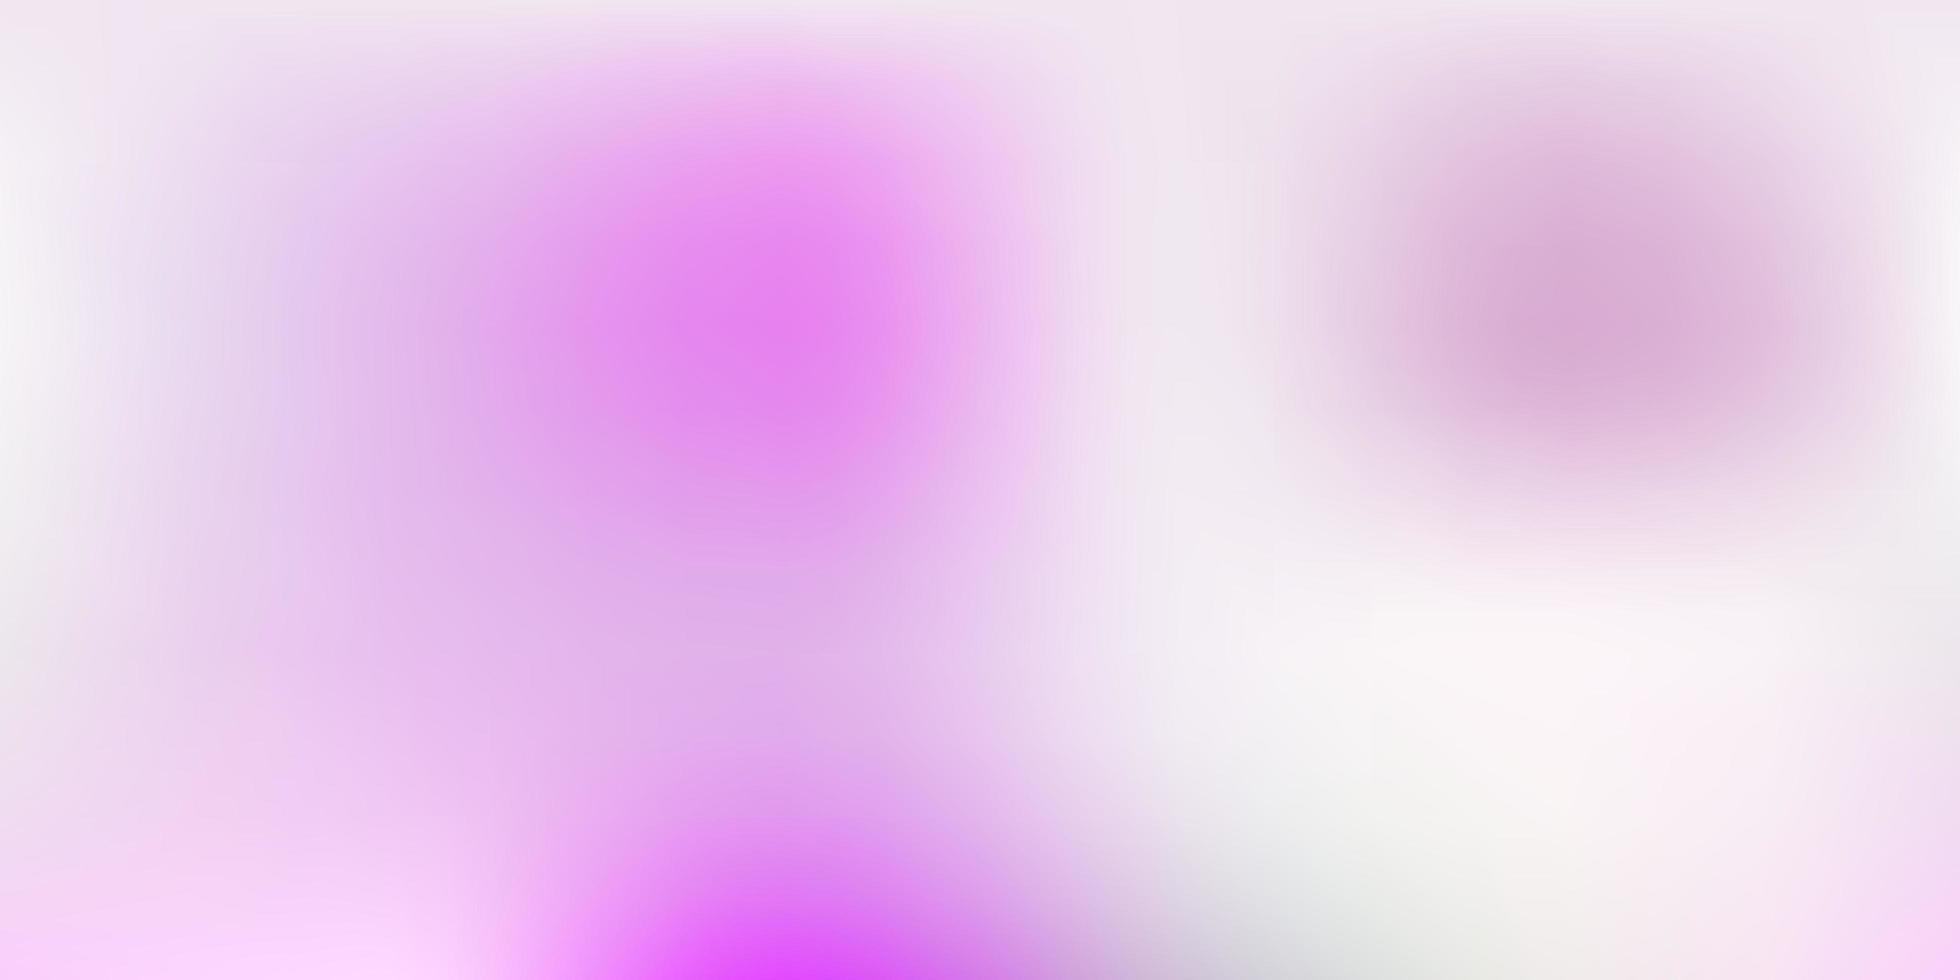 Light Pink, Green vector blurred background.